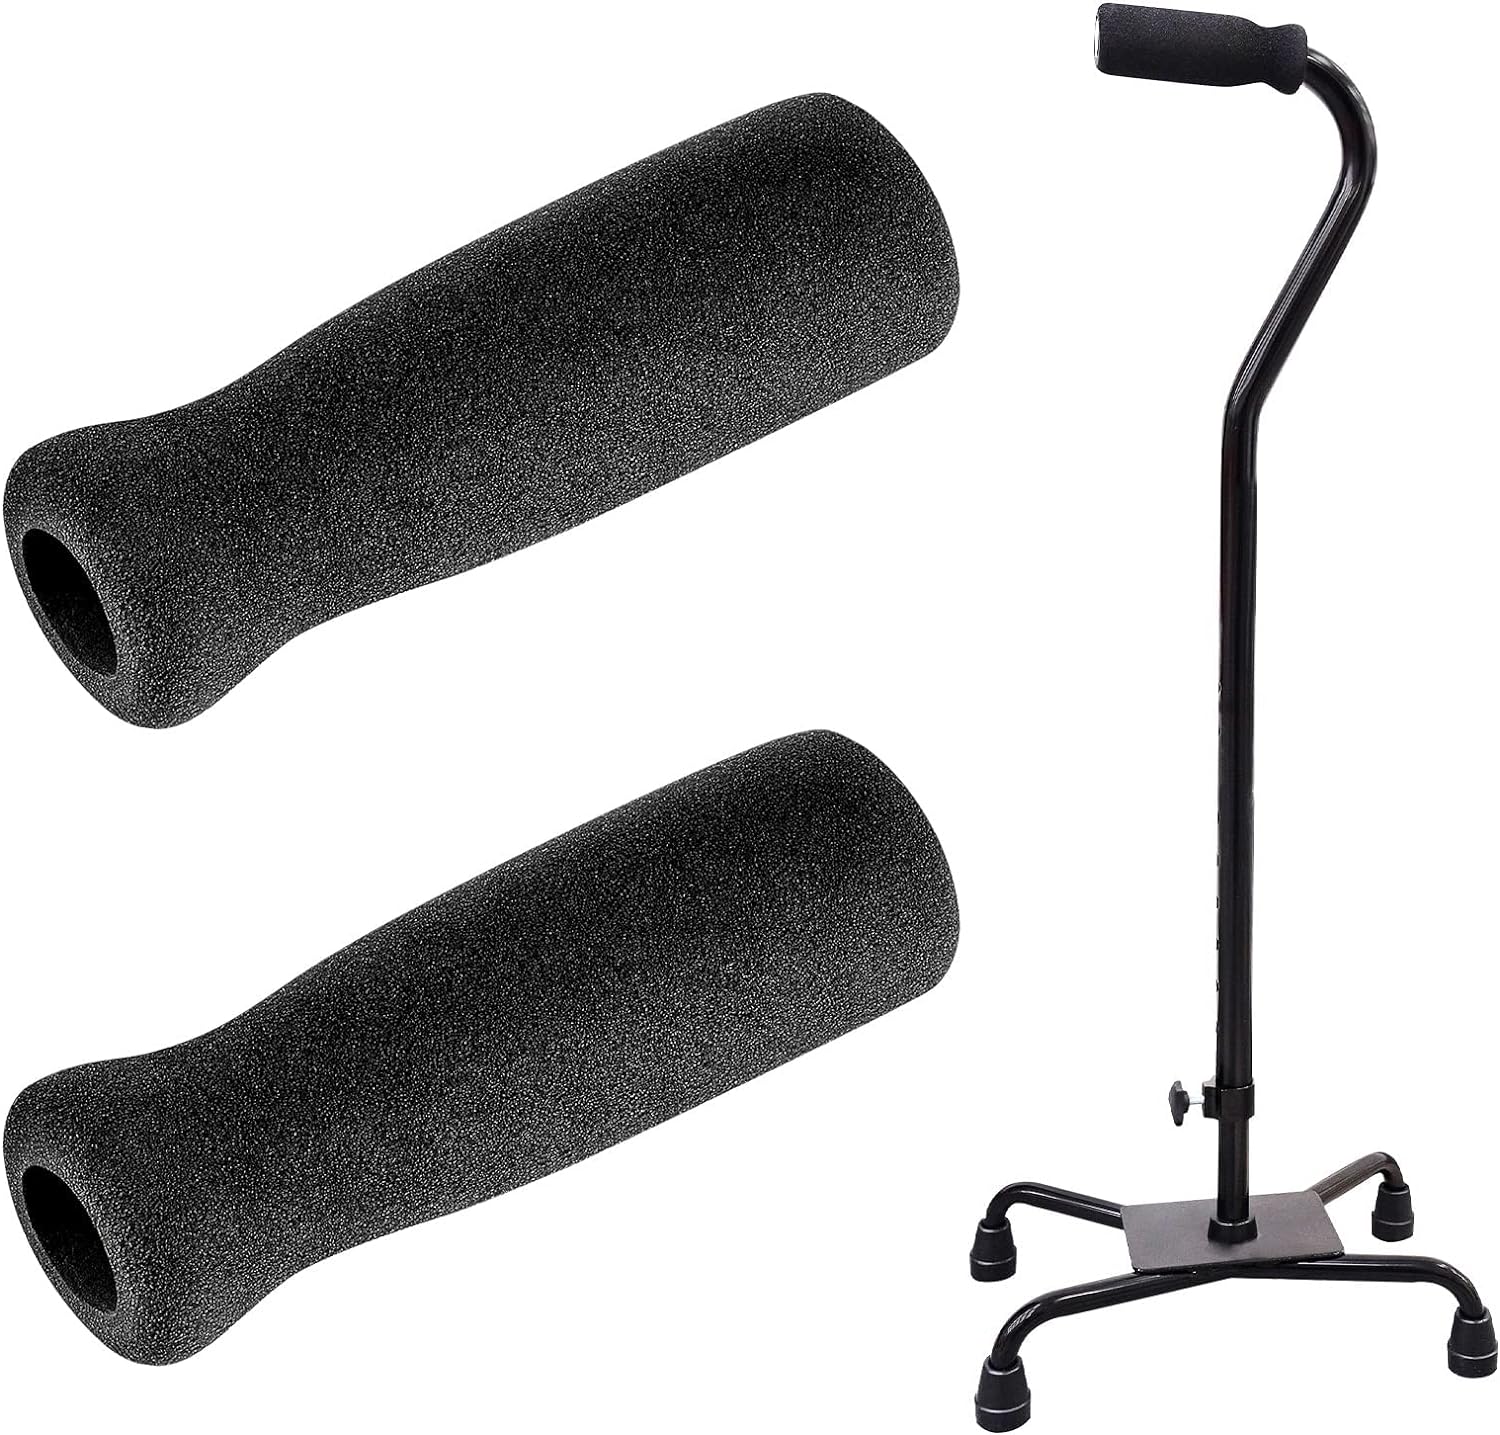 Cane Grip 交換用杖グリップ フォームケーンハンドルグリップ 交換用 オフセット杖グリップ ウォーキングケーン ハンドグリップ フォームハンドル 杖 自転車ハンドルバー用 4.53 x 0.98 x 0.98…